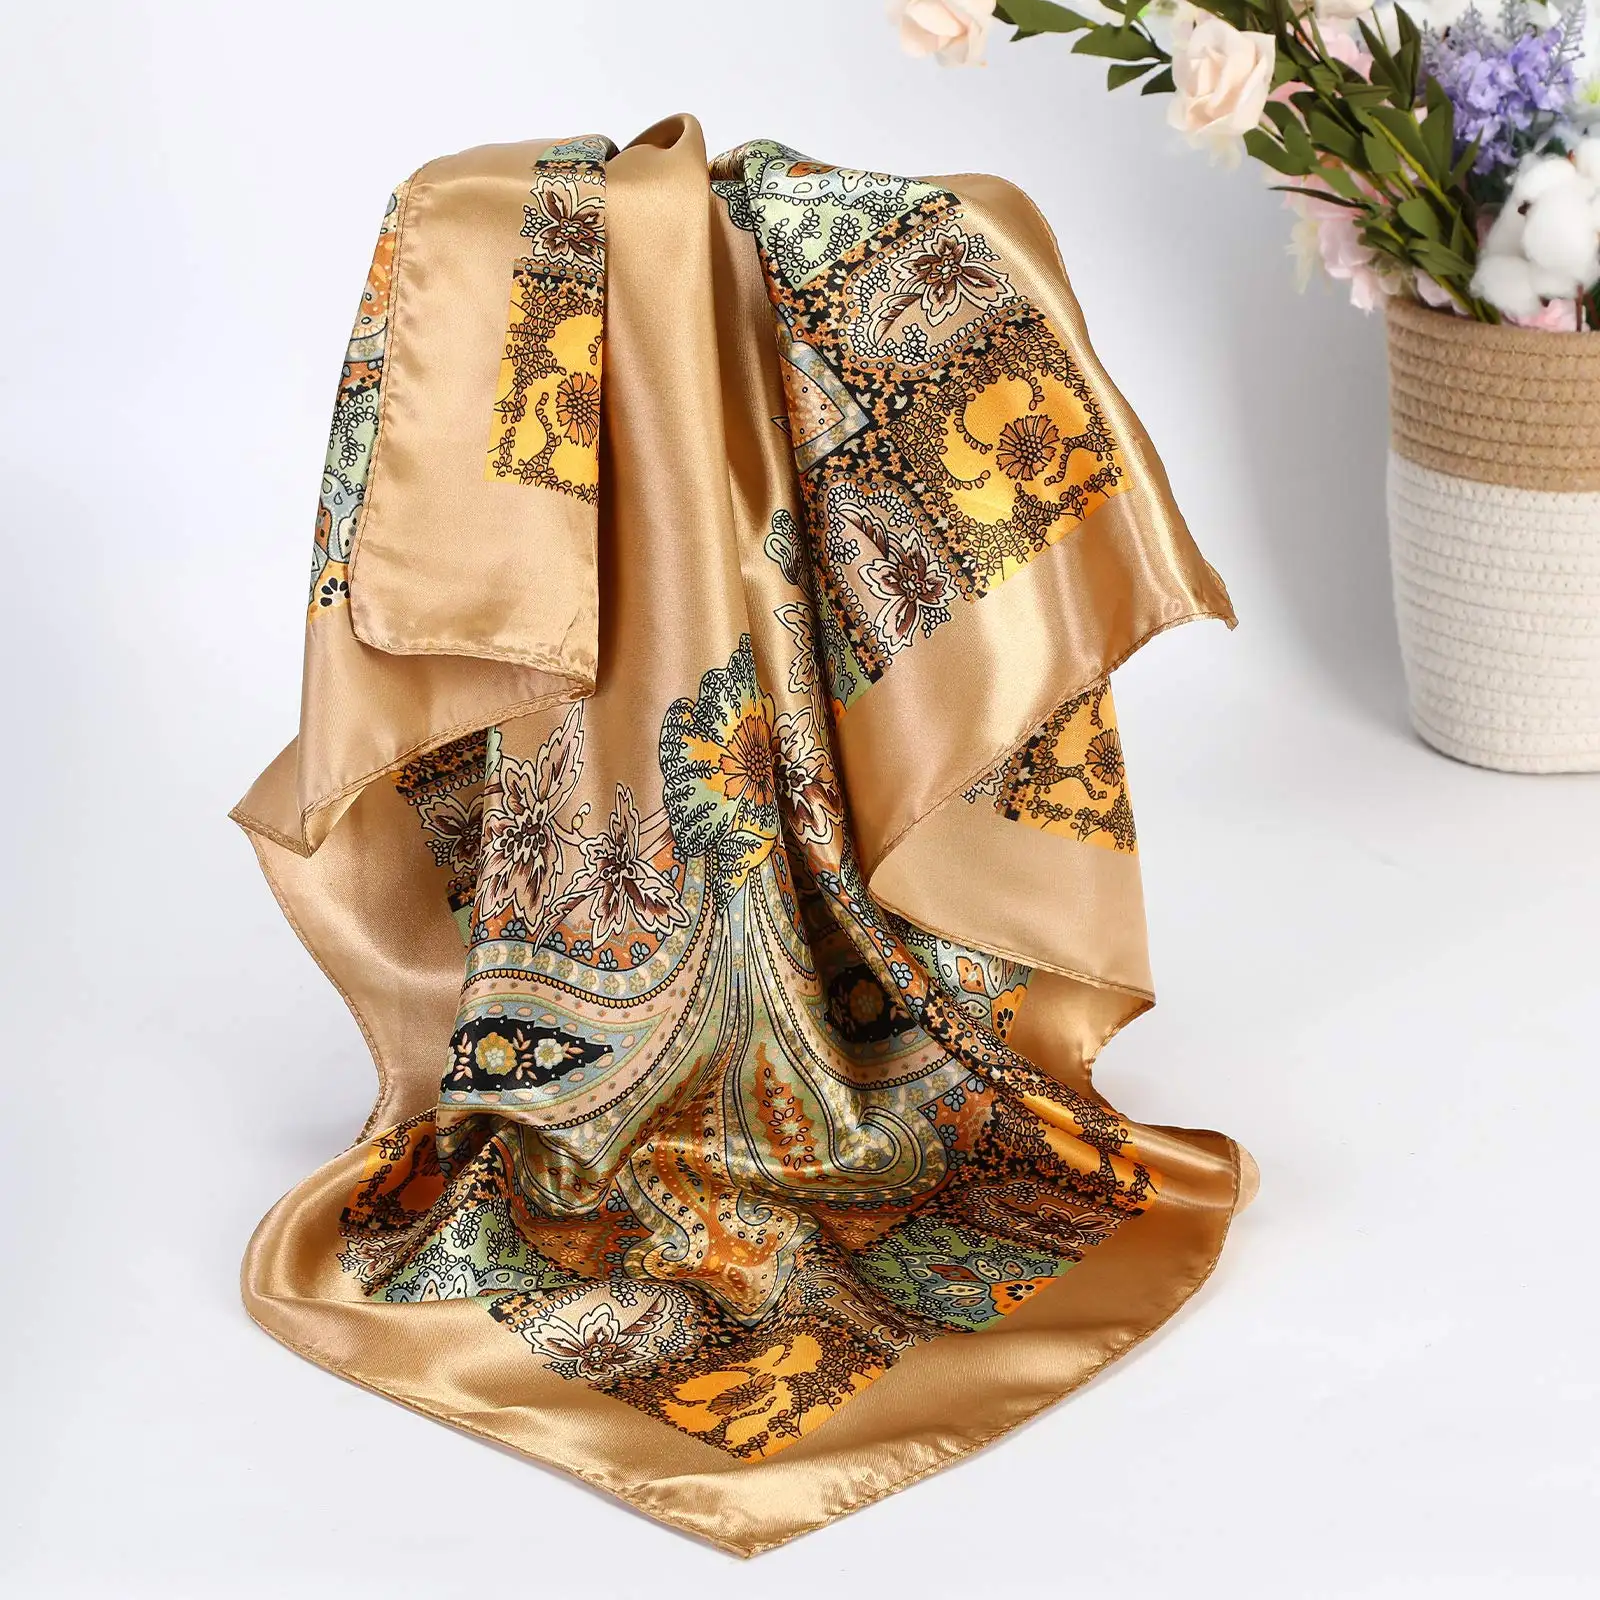 Quanke venta al por mayor 90cm bufandas de seda Bandana mujer 100% bufanda de seda logotipo impreso